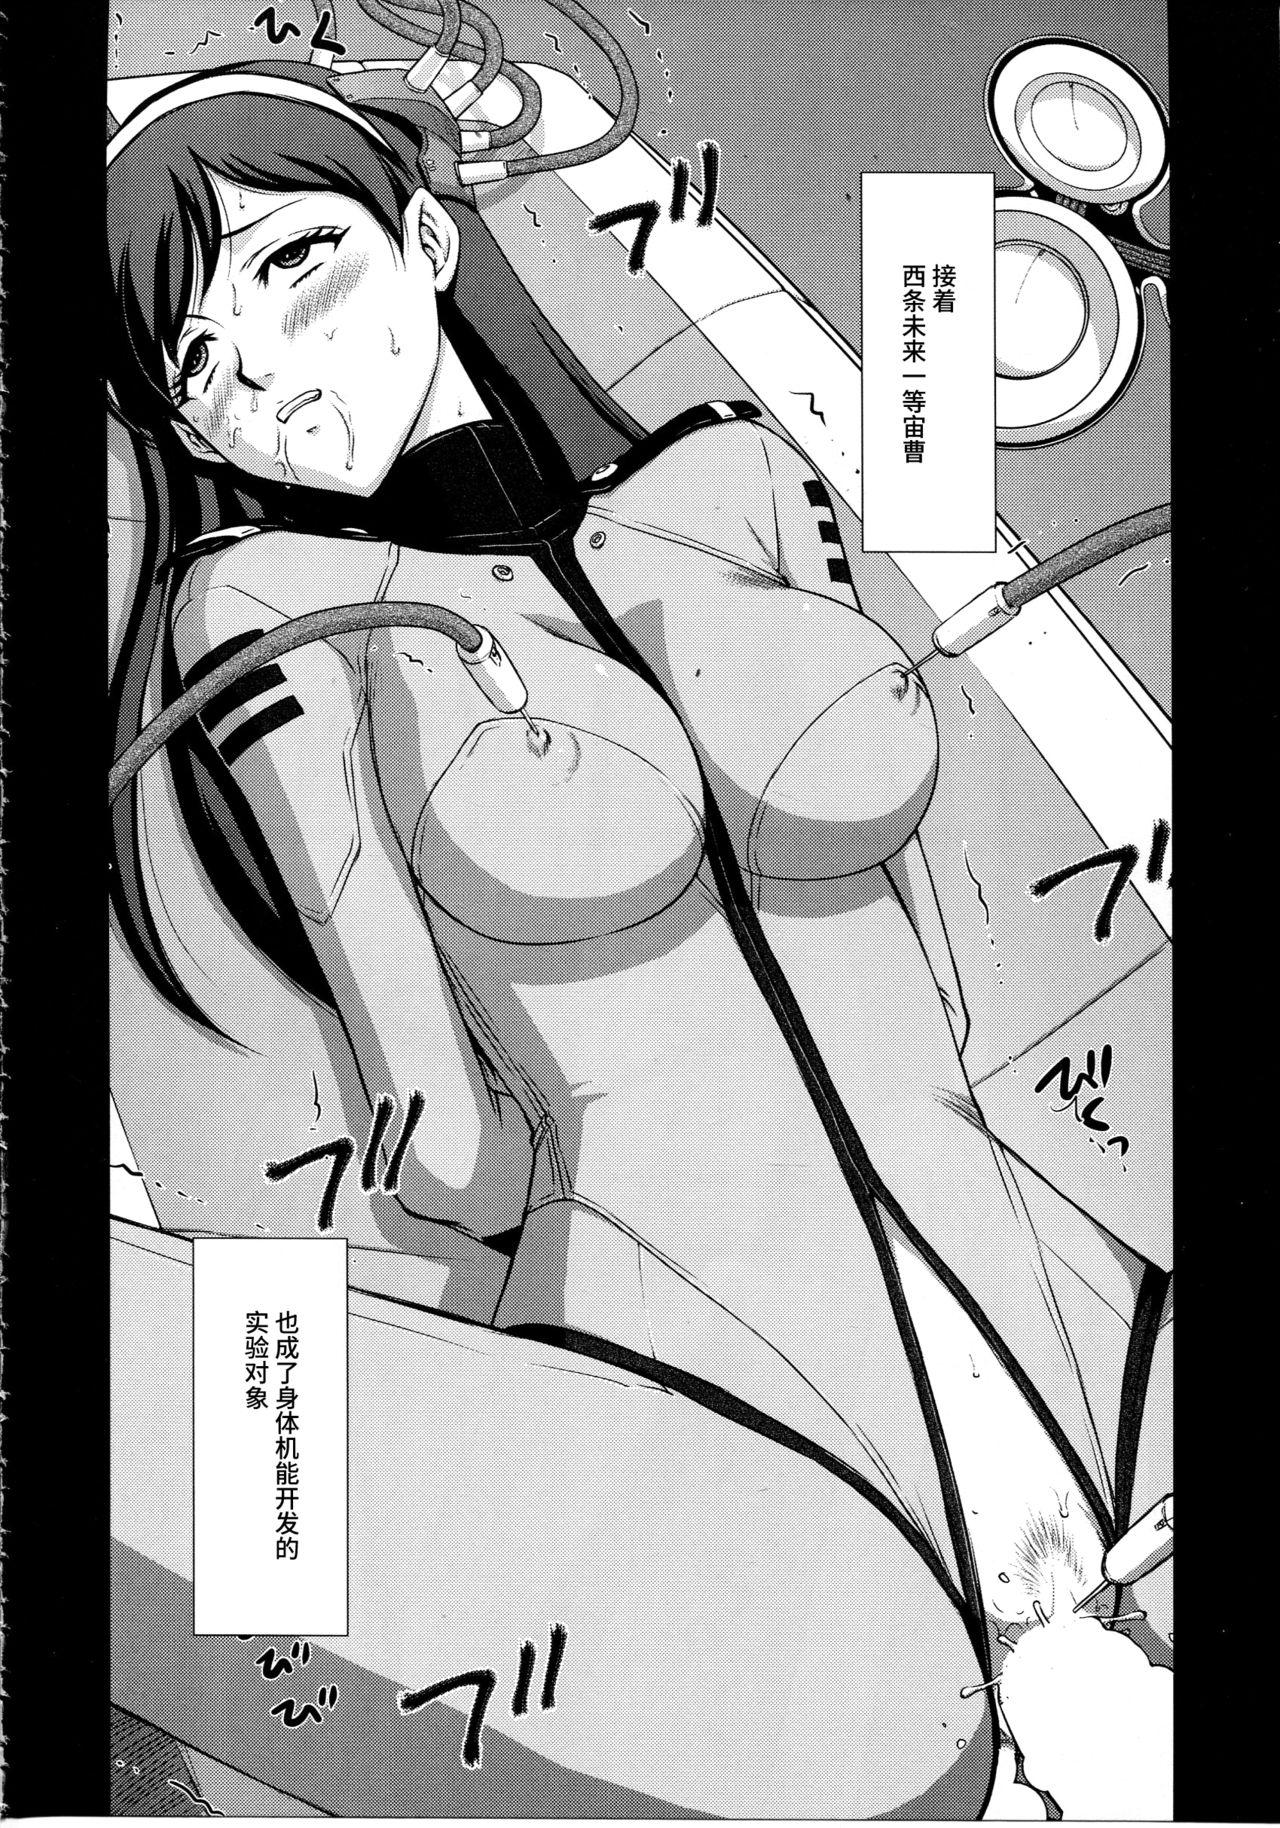 Perverted Yuki no Shizuku - Space battleship yamato 2199 Fat - Page 7